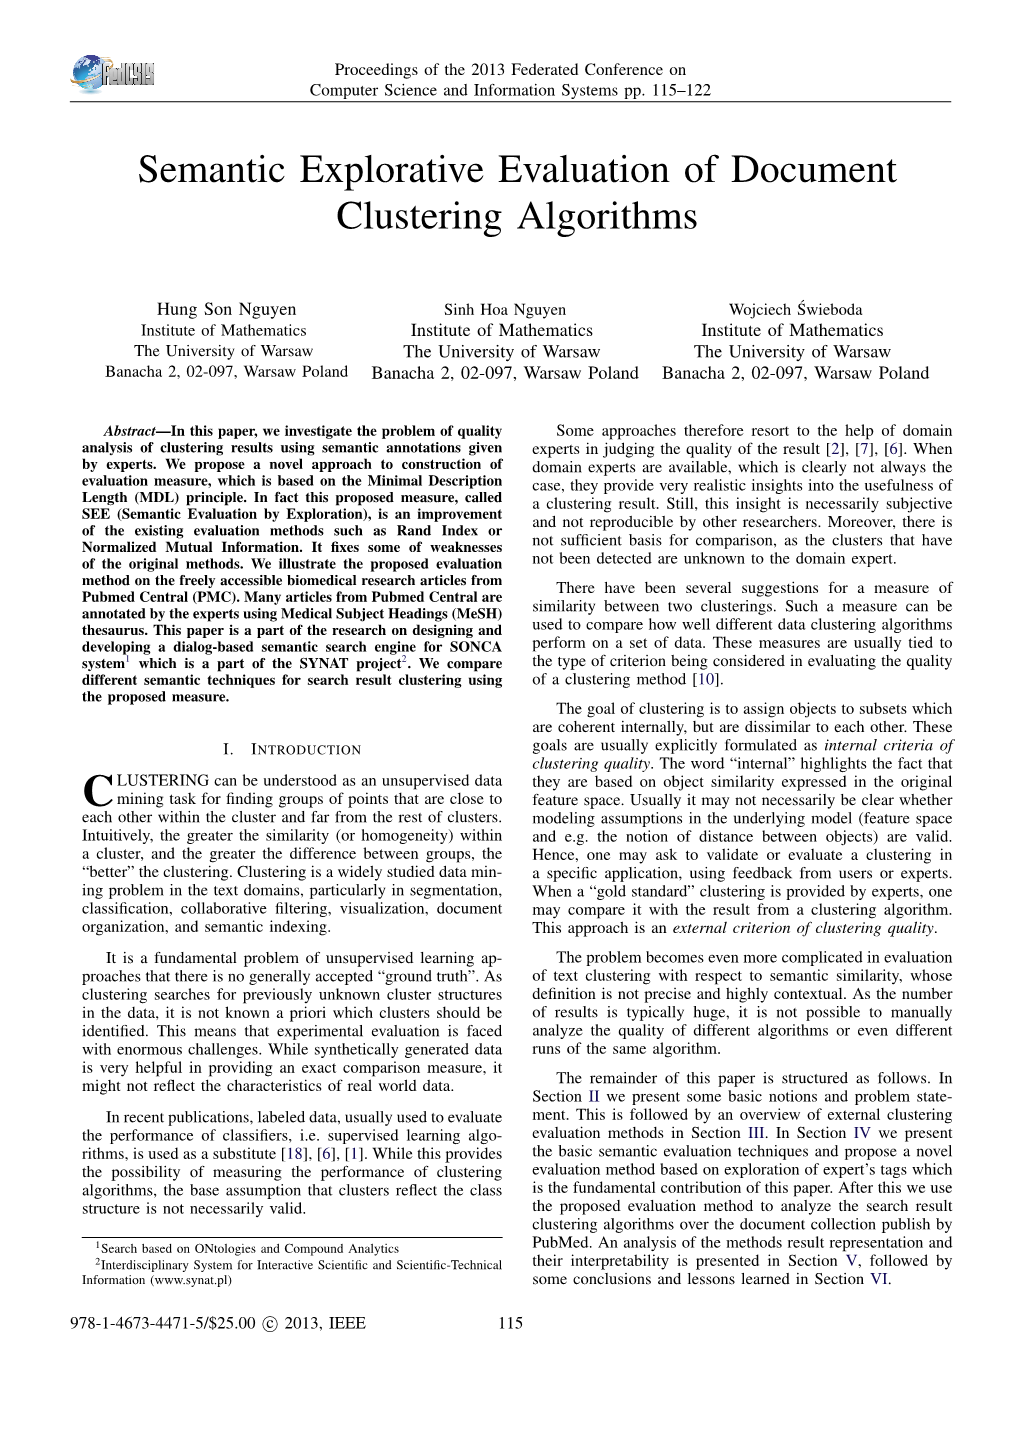 Semantic Explorative Evaluation of Document Clustering Algorithms